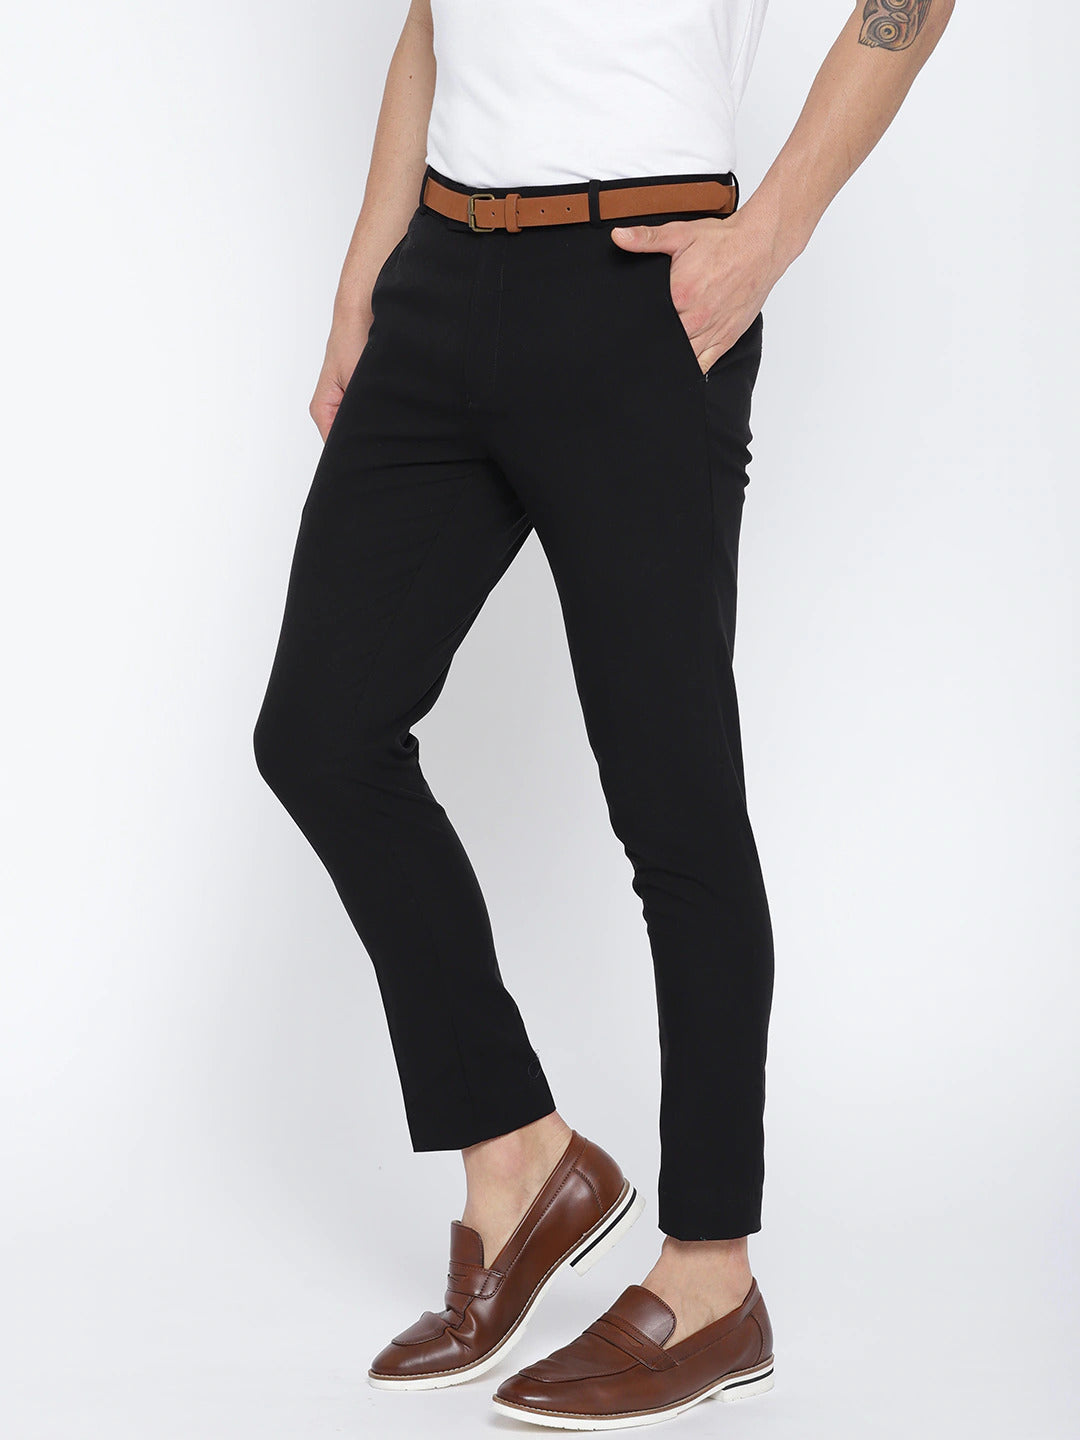 Buy DIGITAL SHOPEE Womens Regular Fit Pants 1TRSBlackS at Amazonin